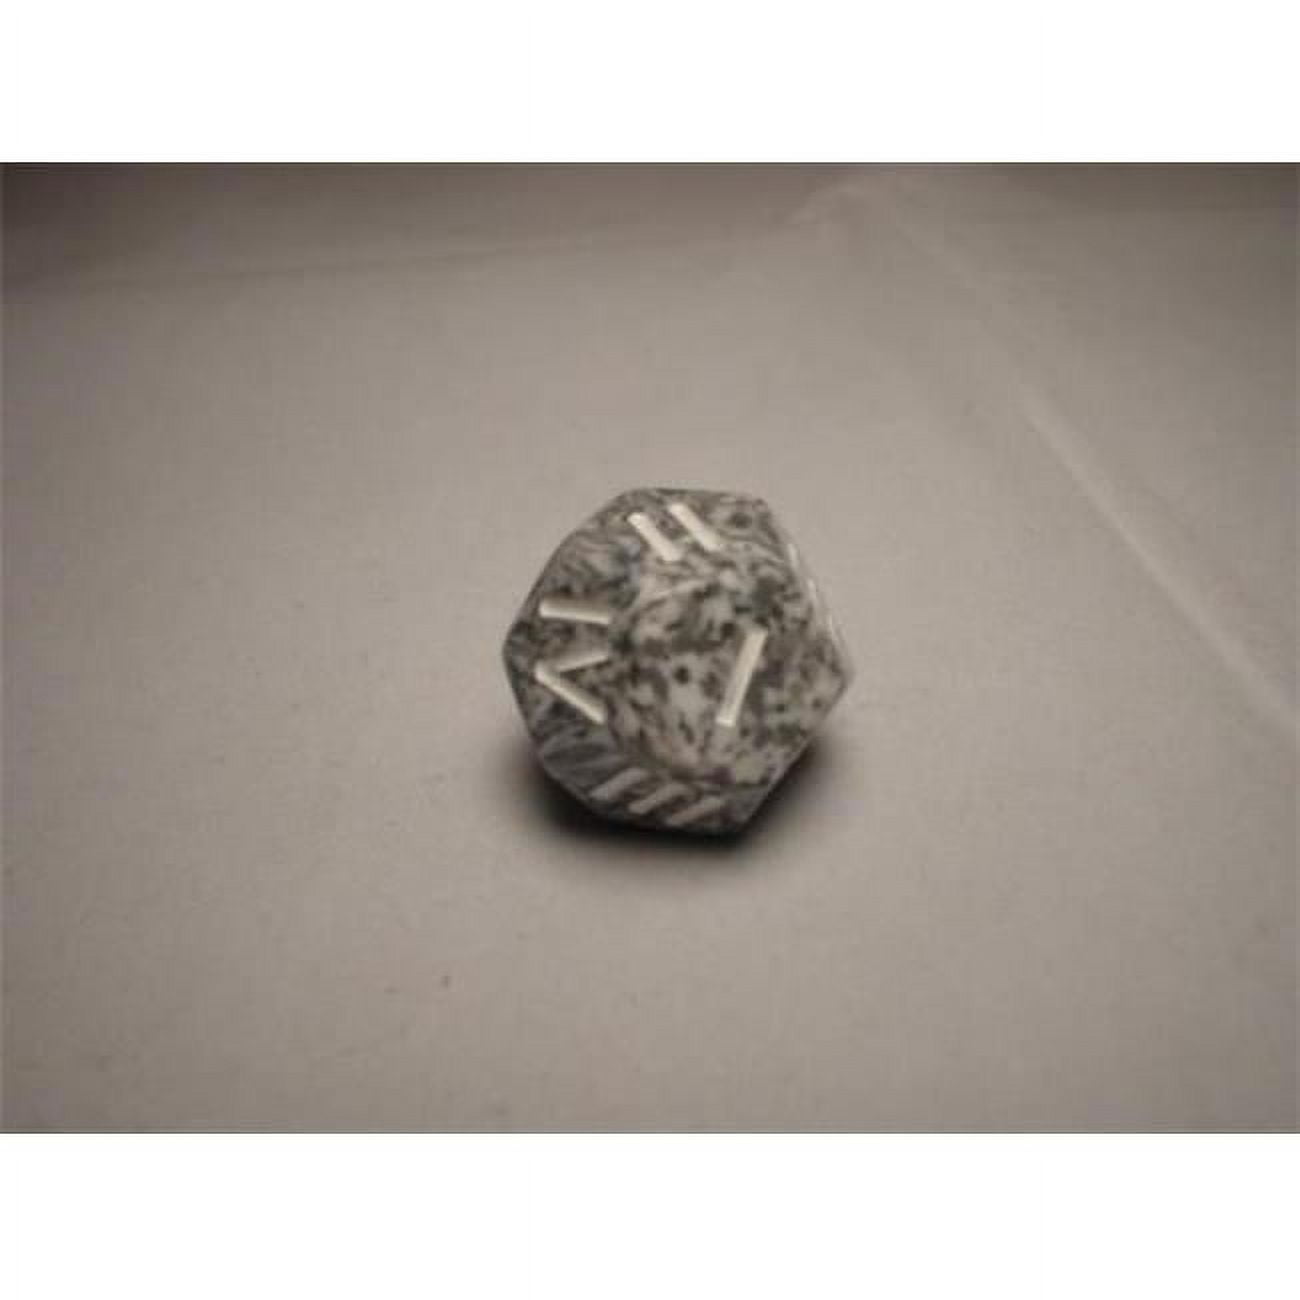 Picture of Chessex CHXXS1430 D4 Speckled Roman Numerals Dice, Granite